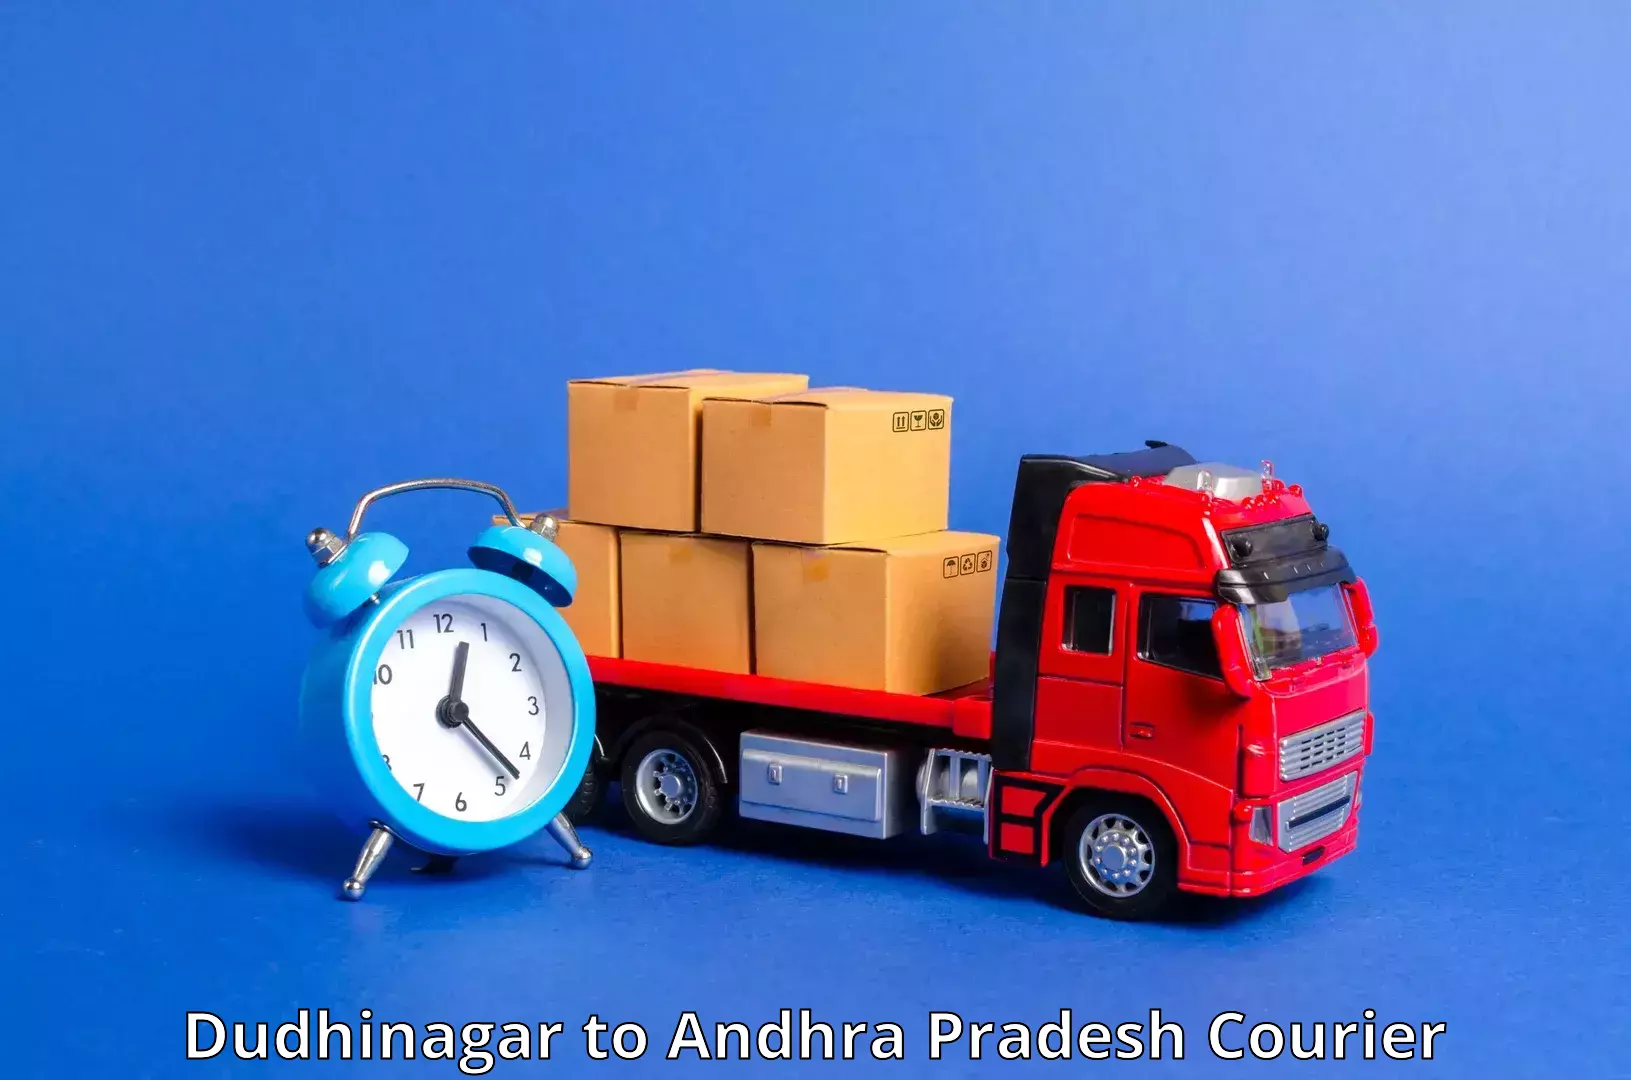 Express delivery capabilities Dudhinagar to Galiveedu